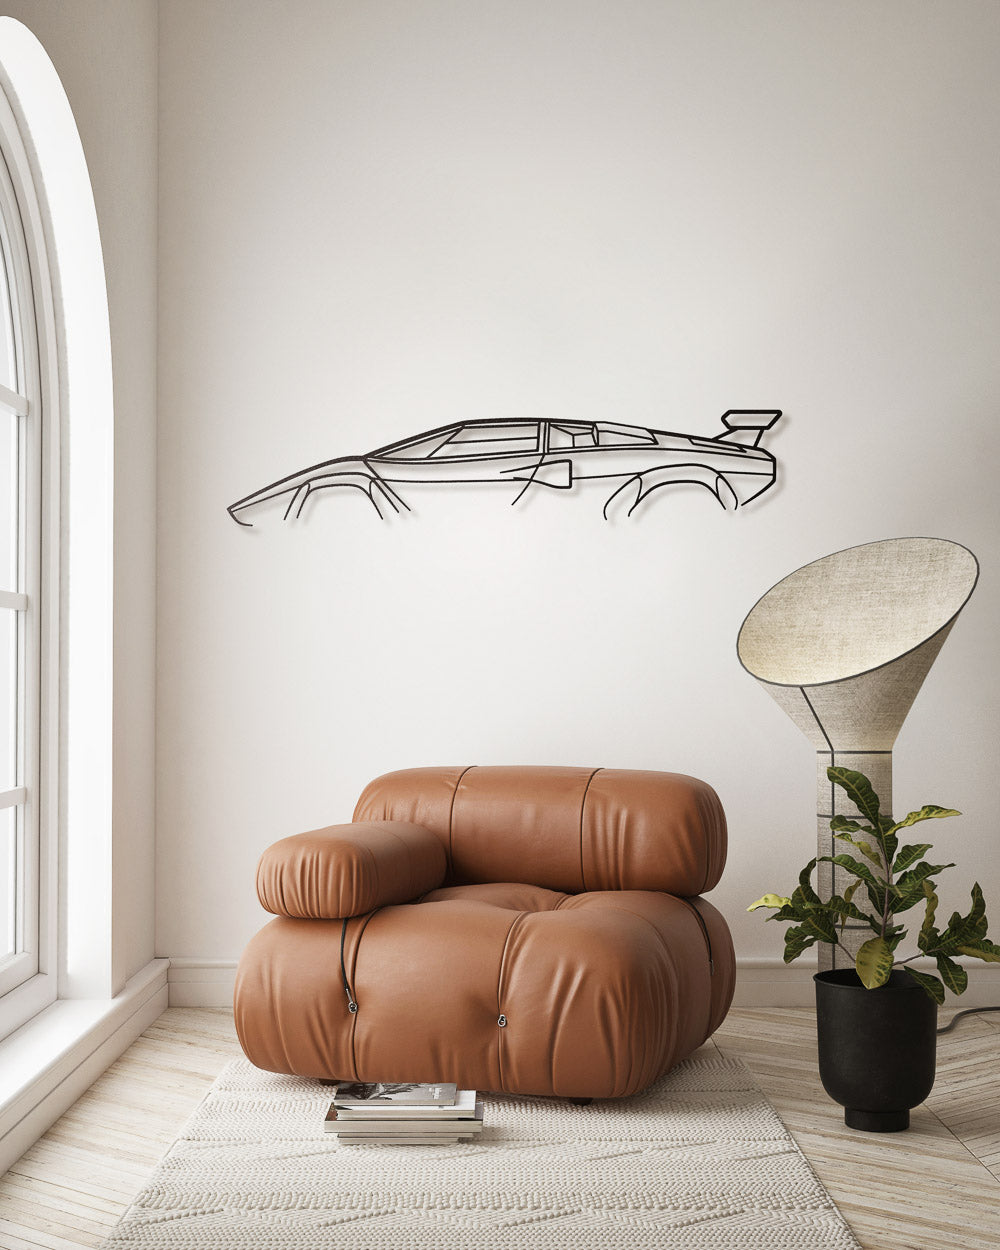 Nos - Lamborghini Countach - Design Metal Silhouette